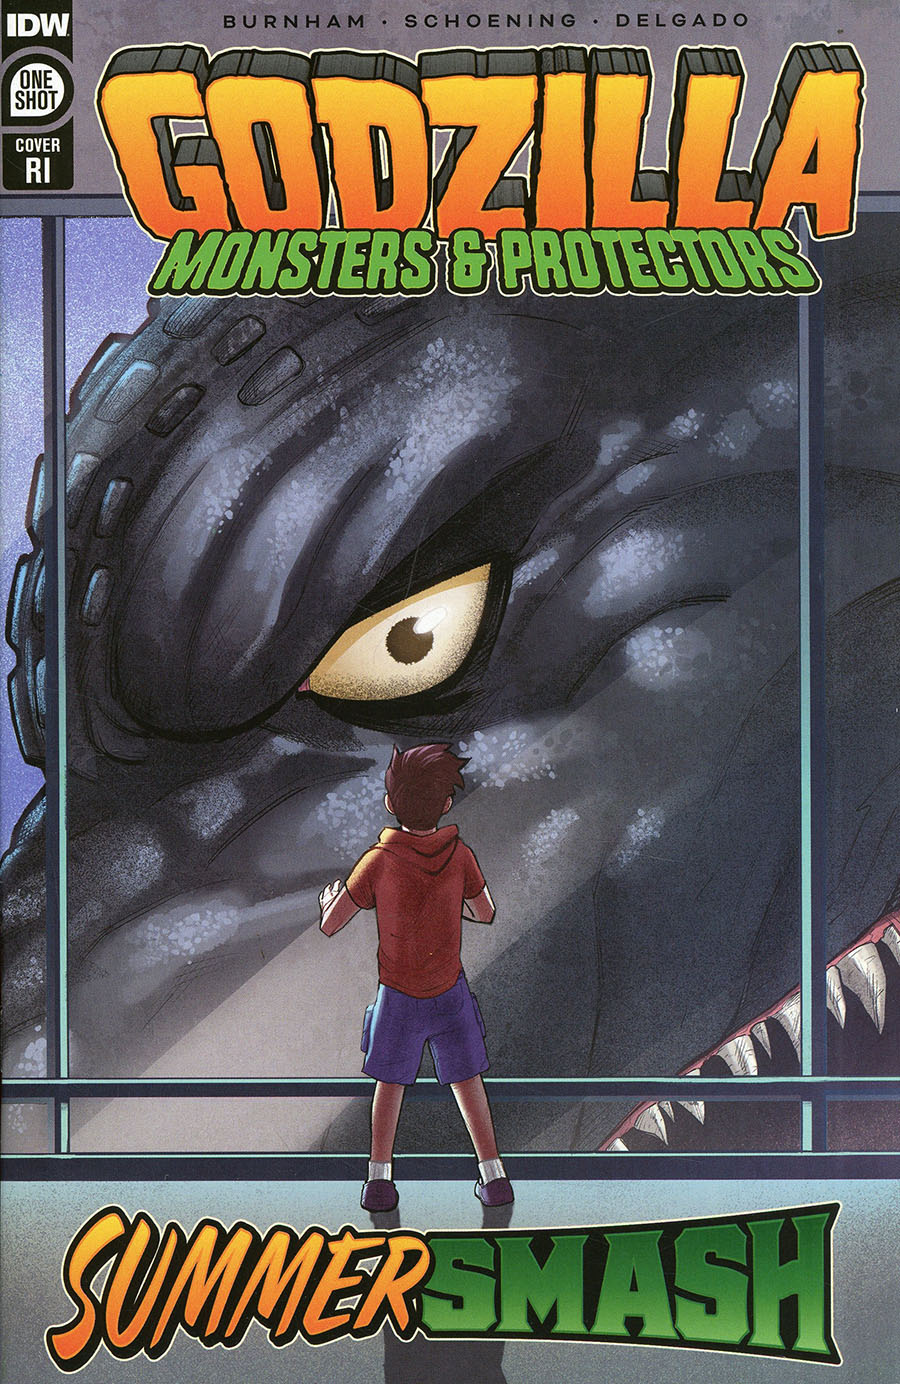 Godzilla Monsters & Protectors Summer Smash #1 (One Shot) Cover C Incentive Kara Huset Variant Cover